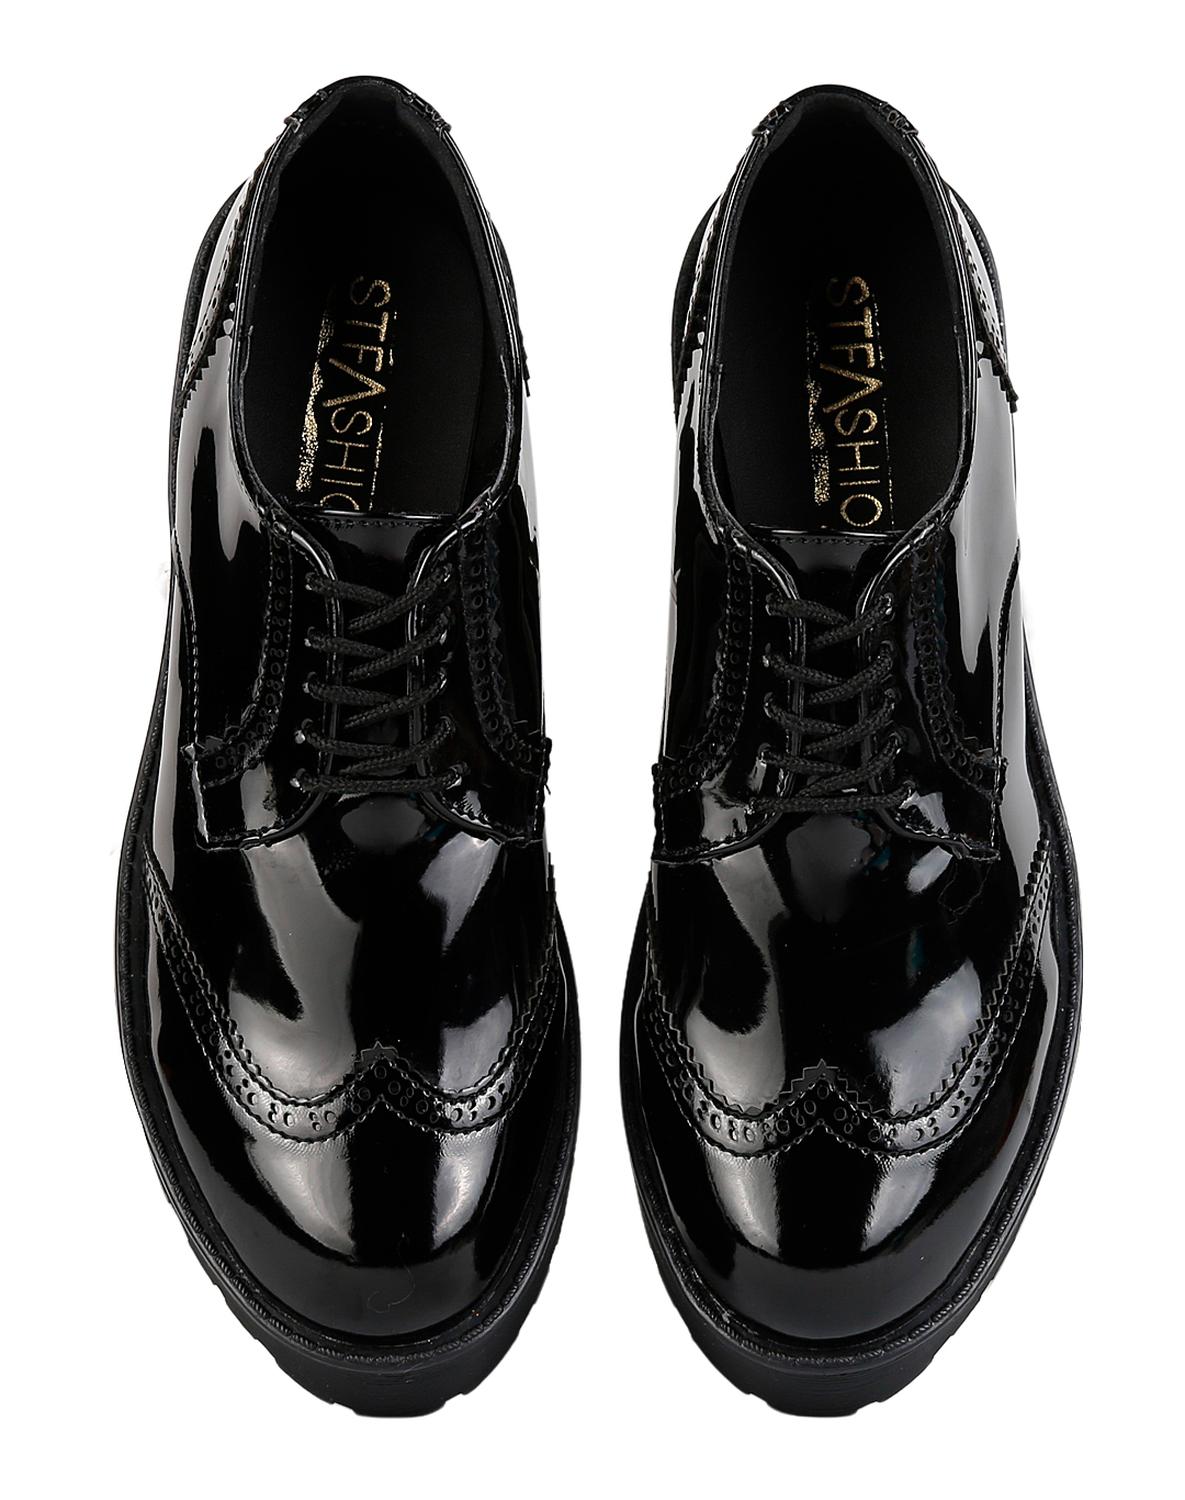 Zapato Casual Mujer Negro Tipo Charol Stfashion 08003800